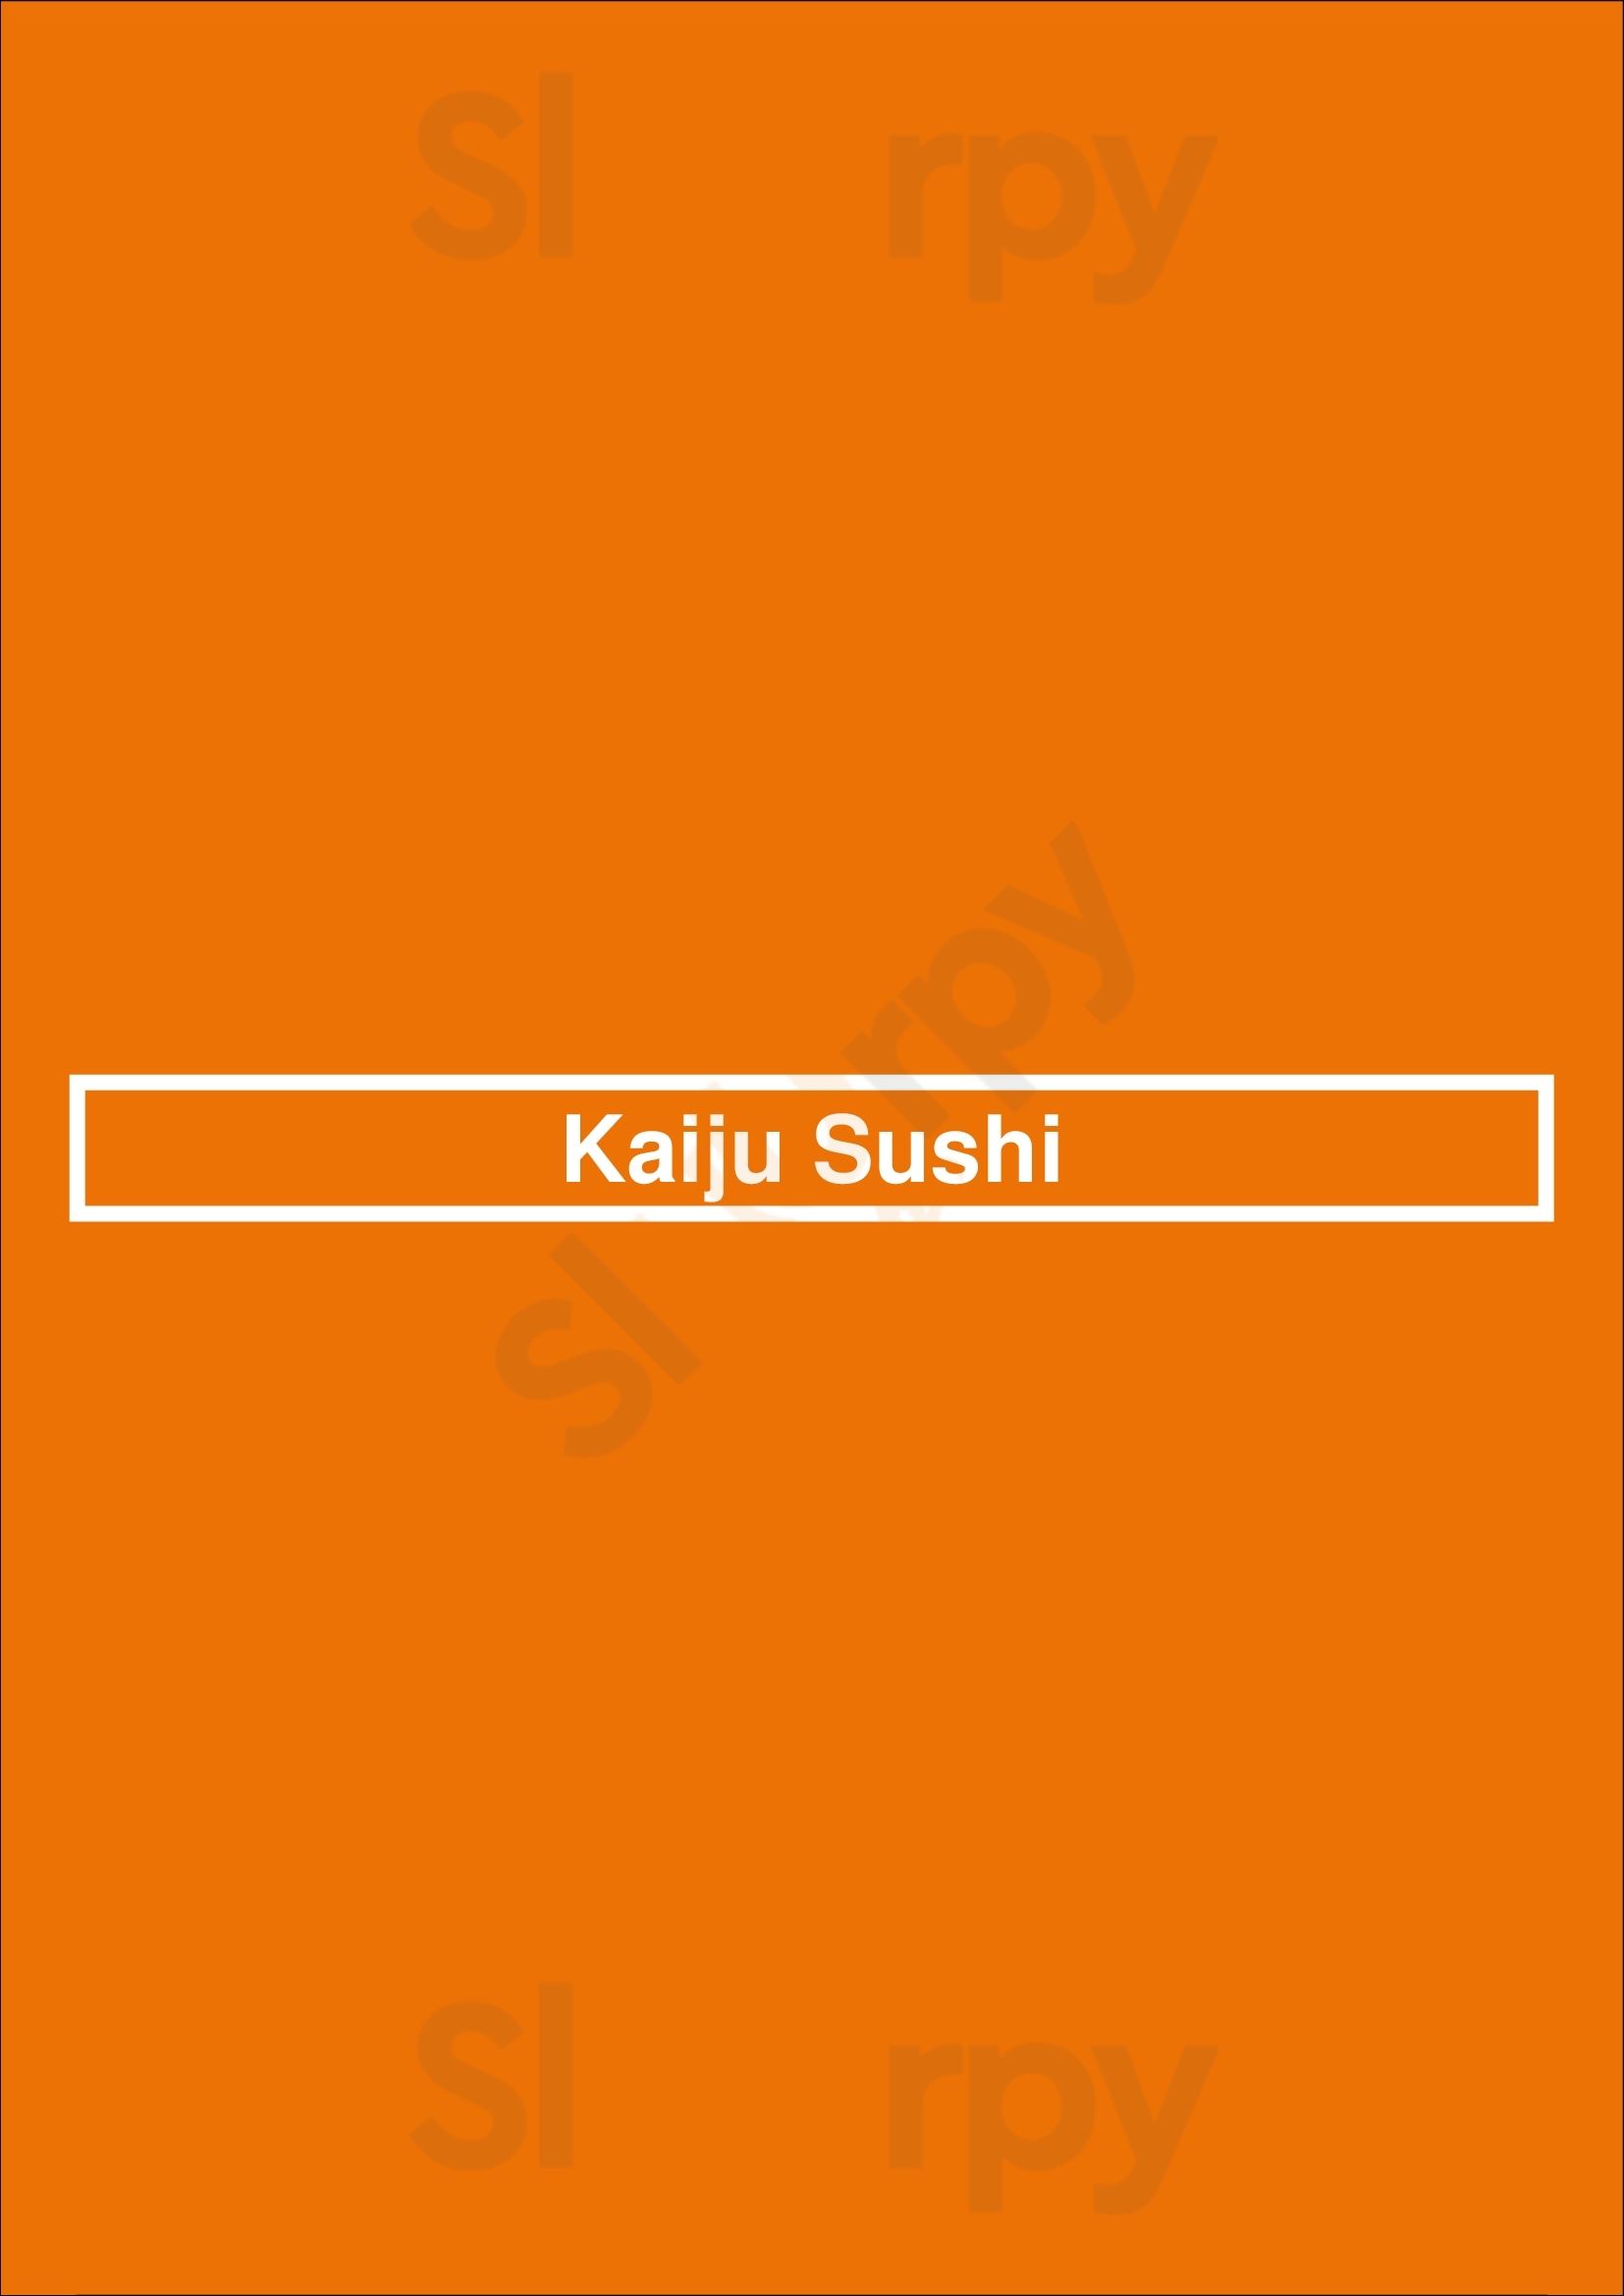 Kaiju Sushi Los Angeles Menu - 1